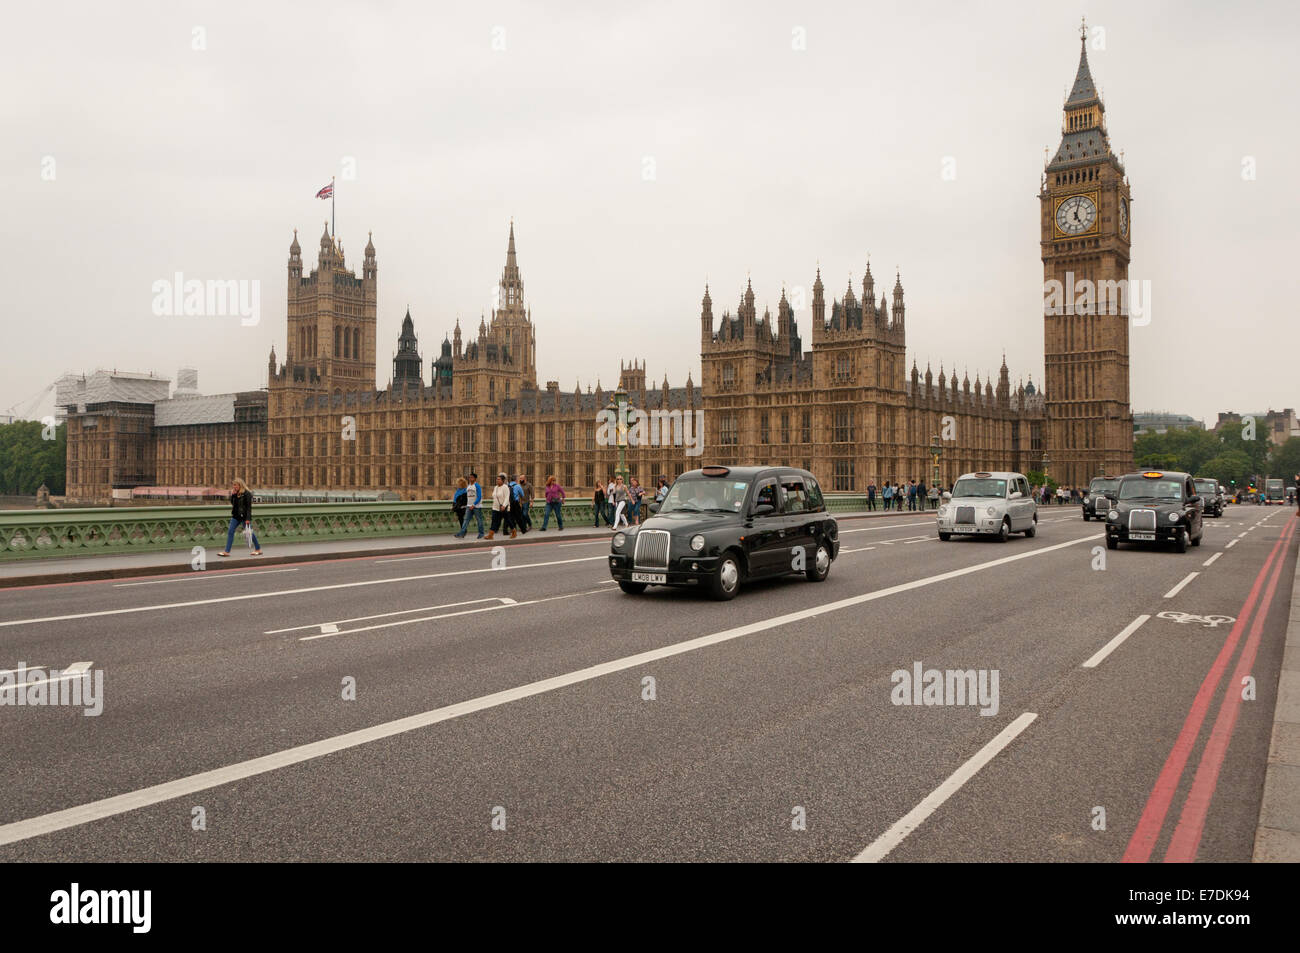 London Taxis on Westminster Bridge under Big Ben Stock Photo - Alamy